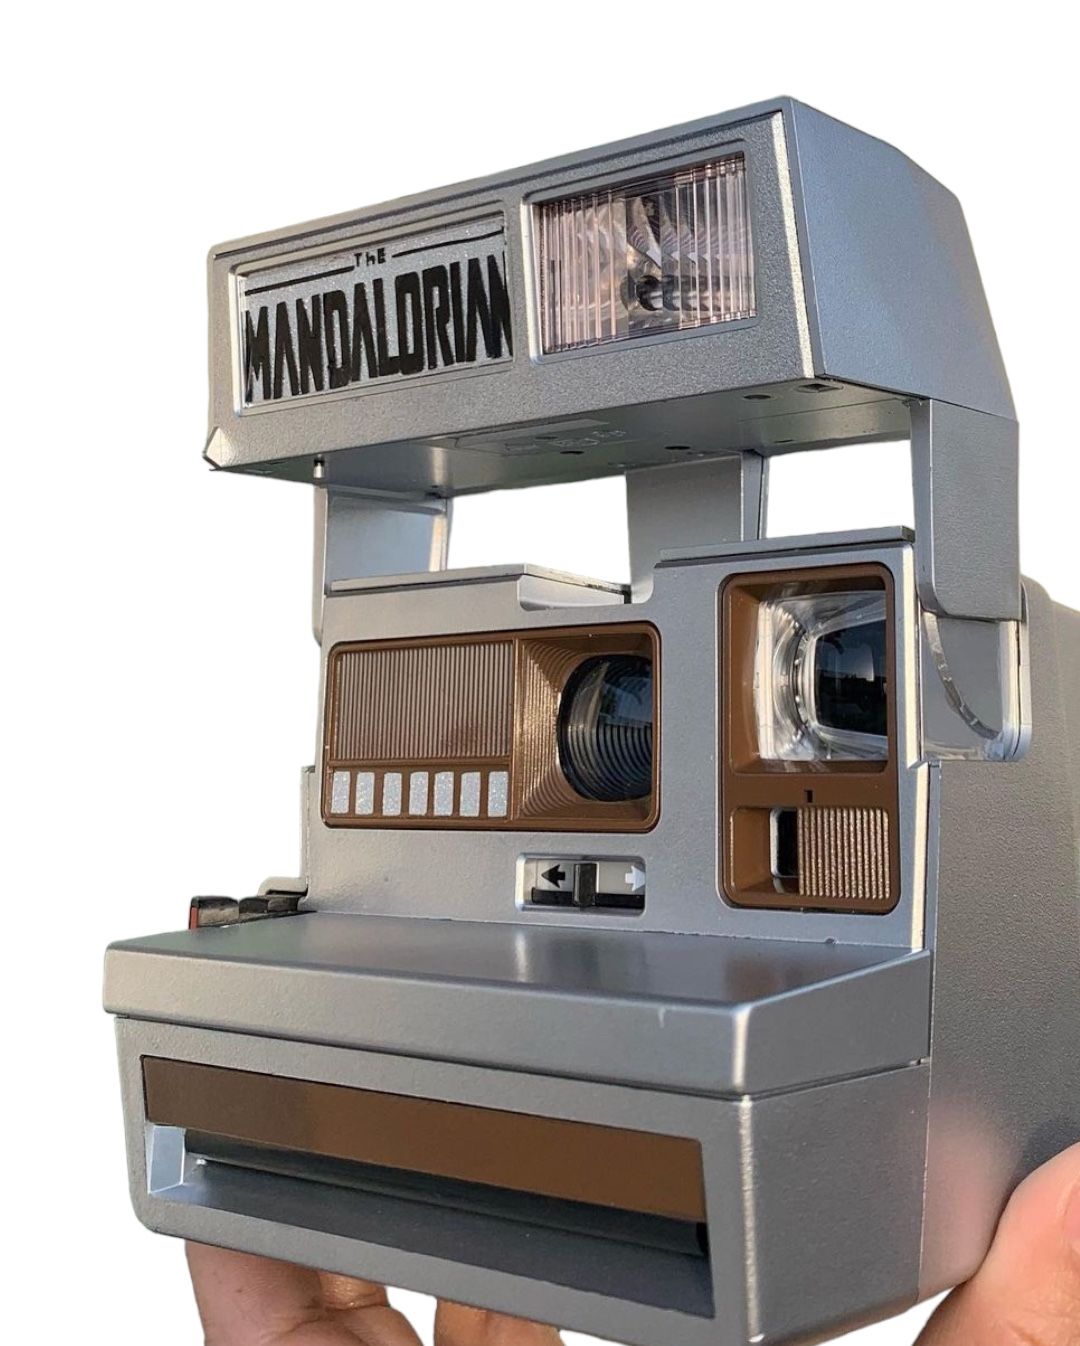 The Mandalorian Polaroid Camera